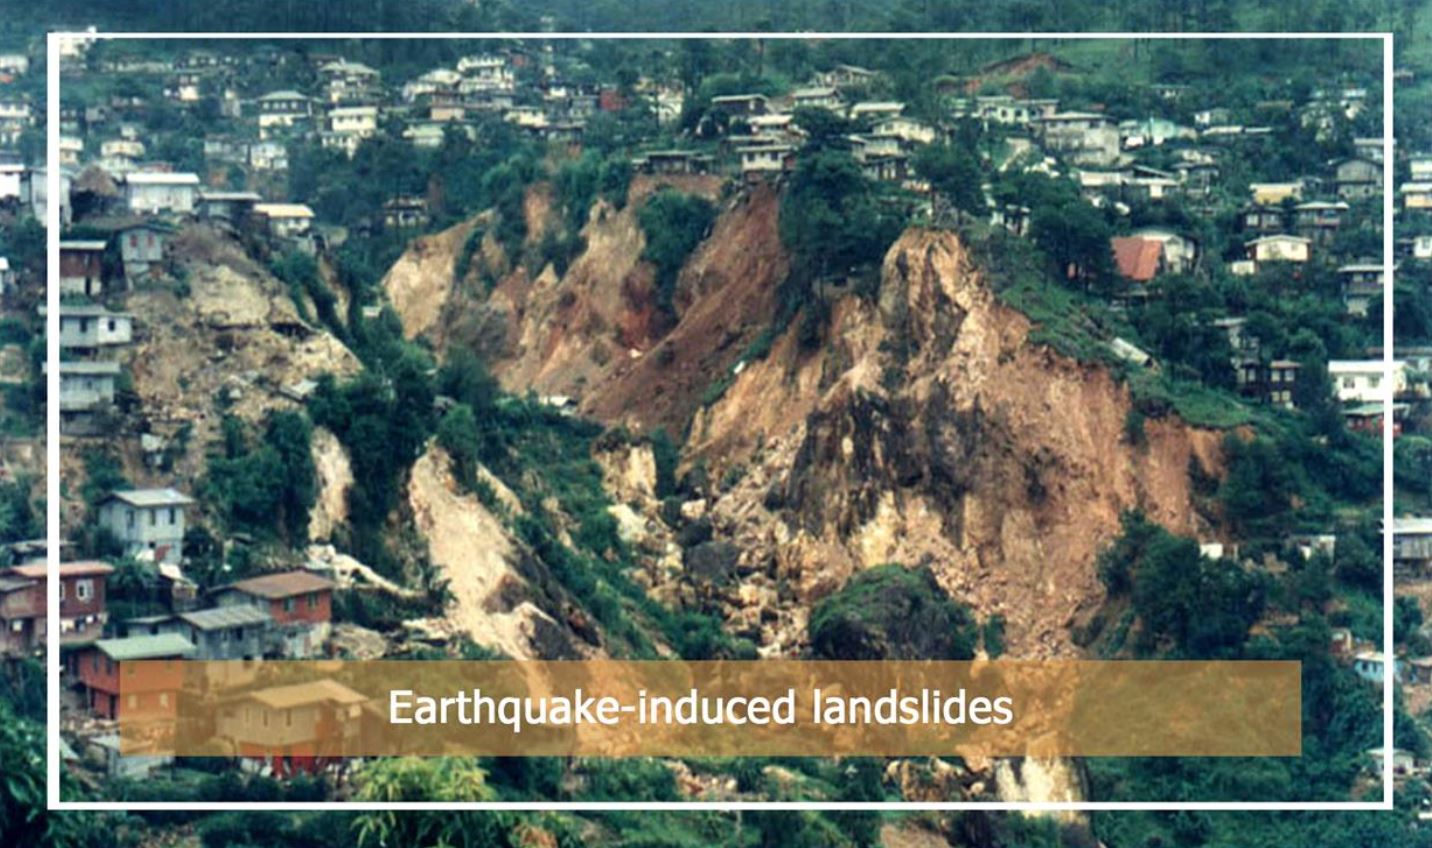 Earthquake-prone areas Phivolcs web-based tool